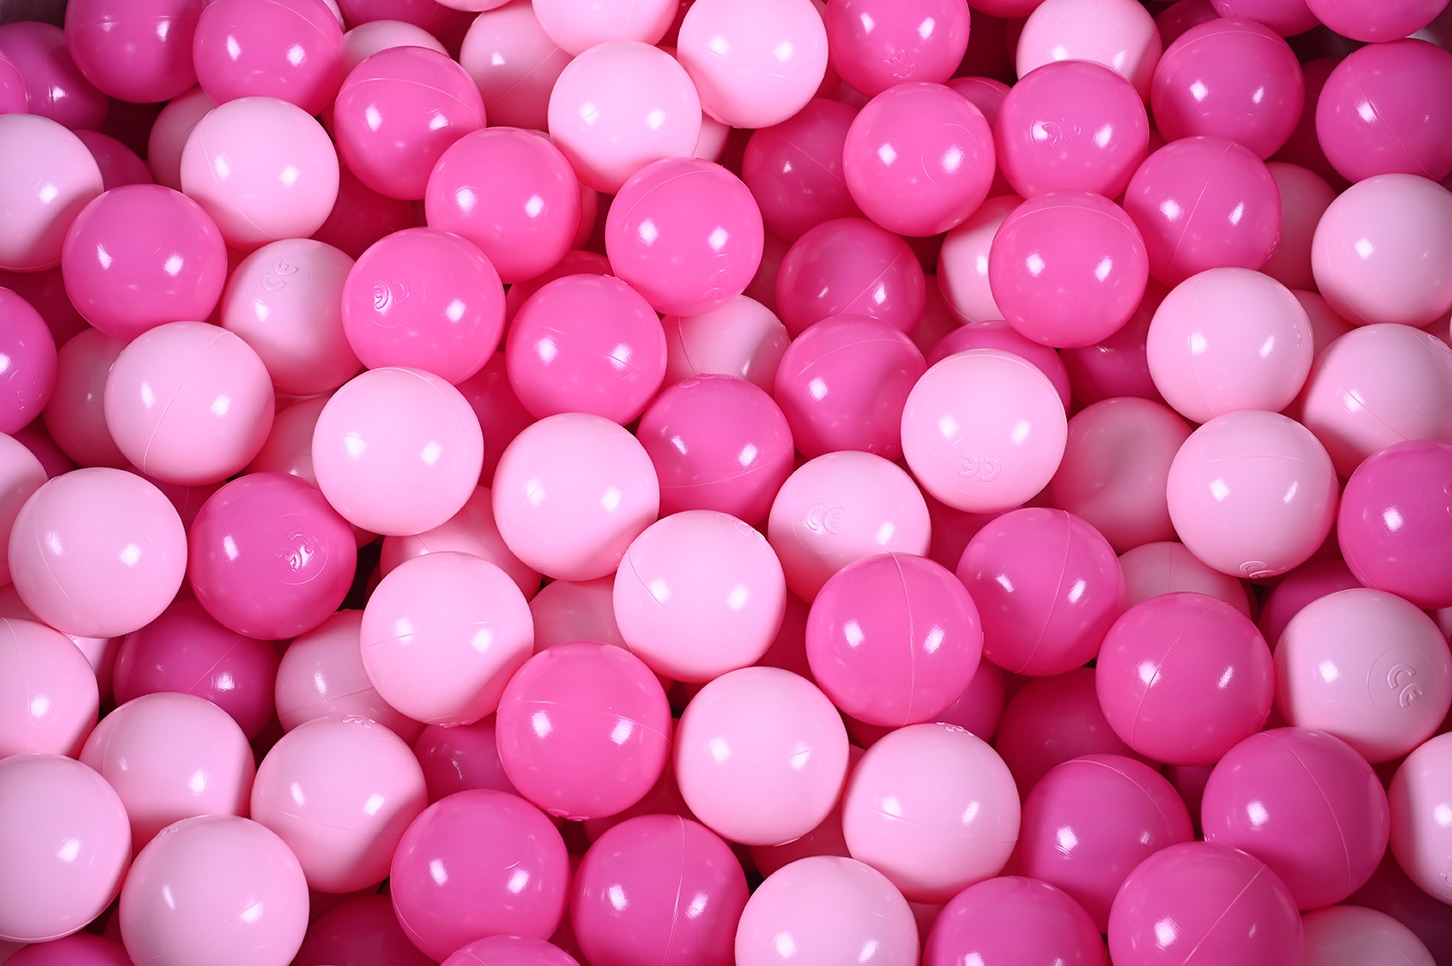 Knorrtoys® Bällebad »Soft, Grey«, mit 300 Bällen soft pink; Made in Europe